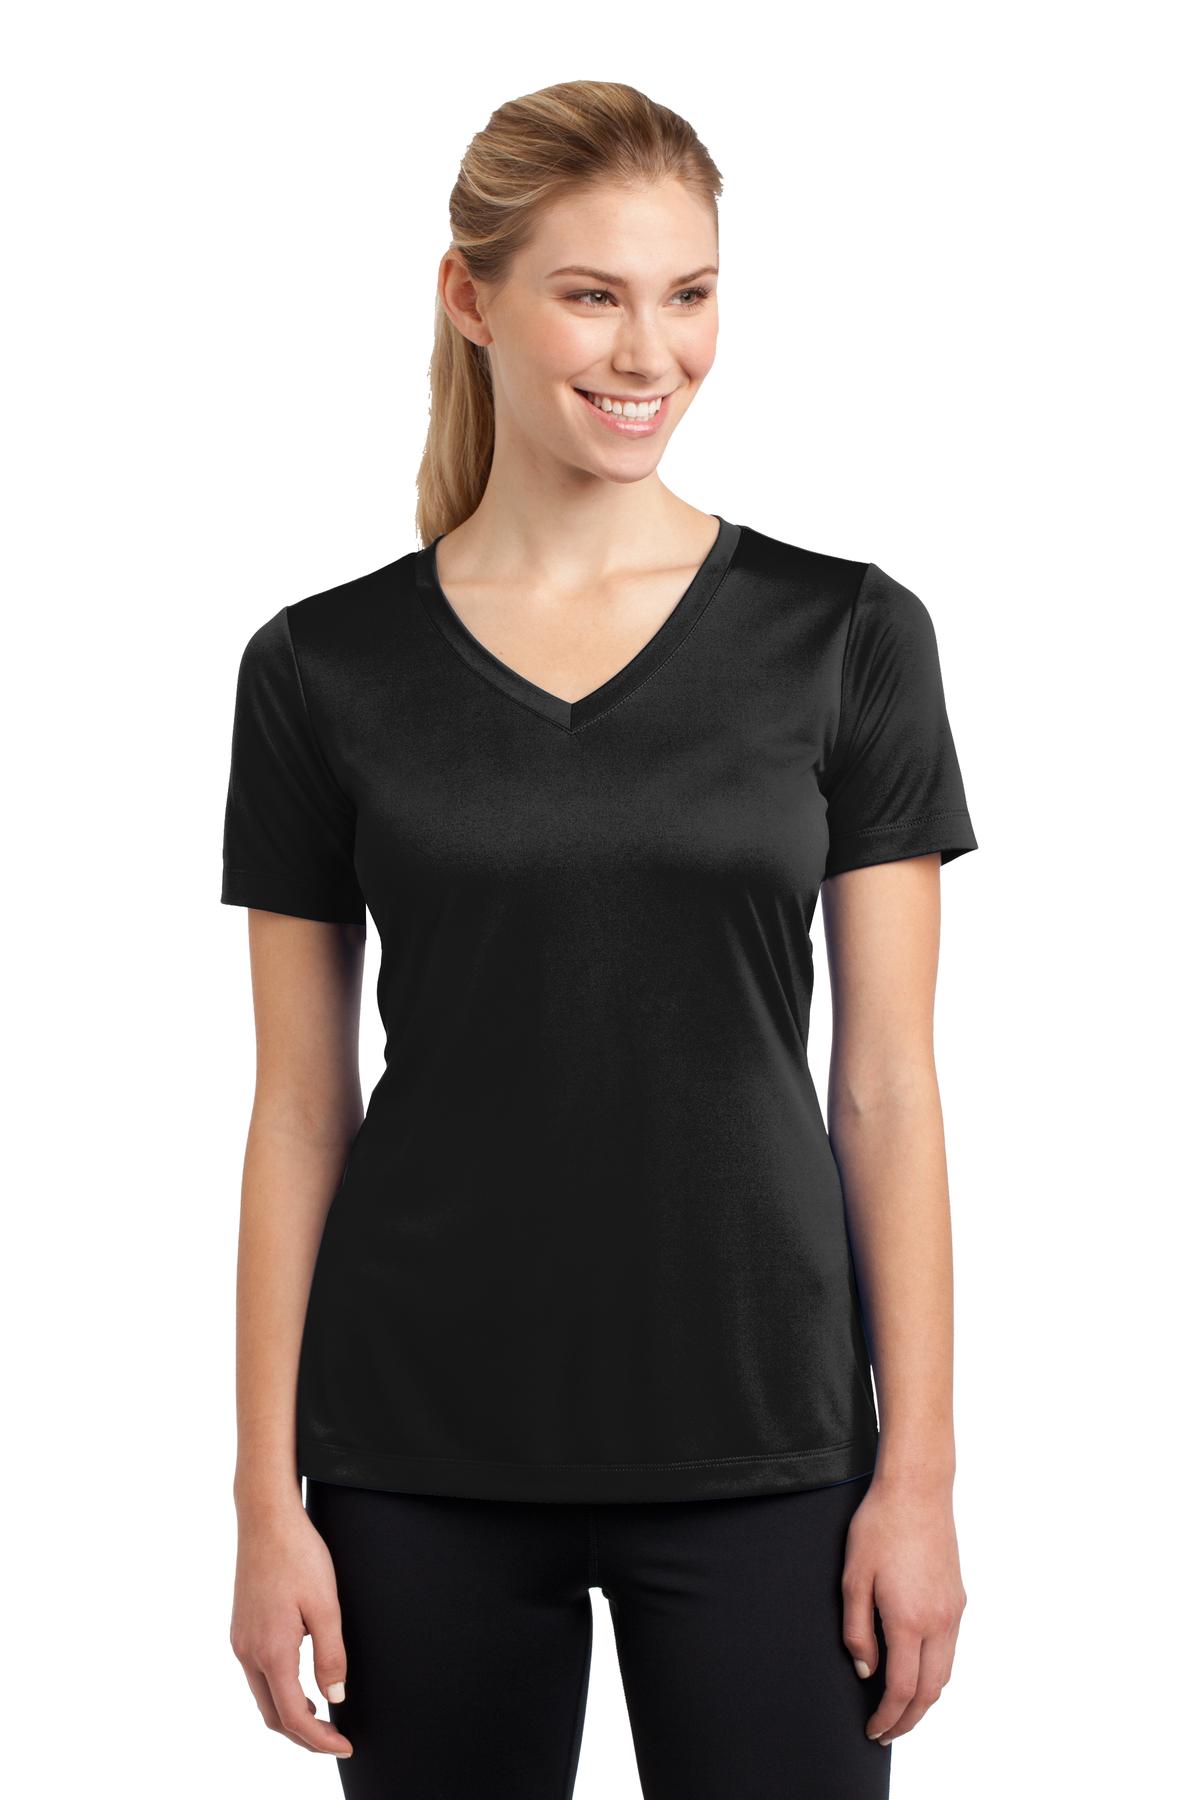 W Pinnacle Ss Tech Tee Black - women's t-shirt - FOX - 23.91 €